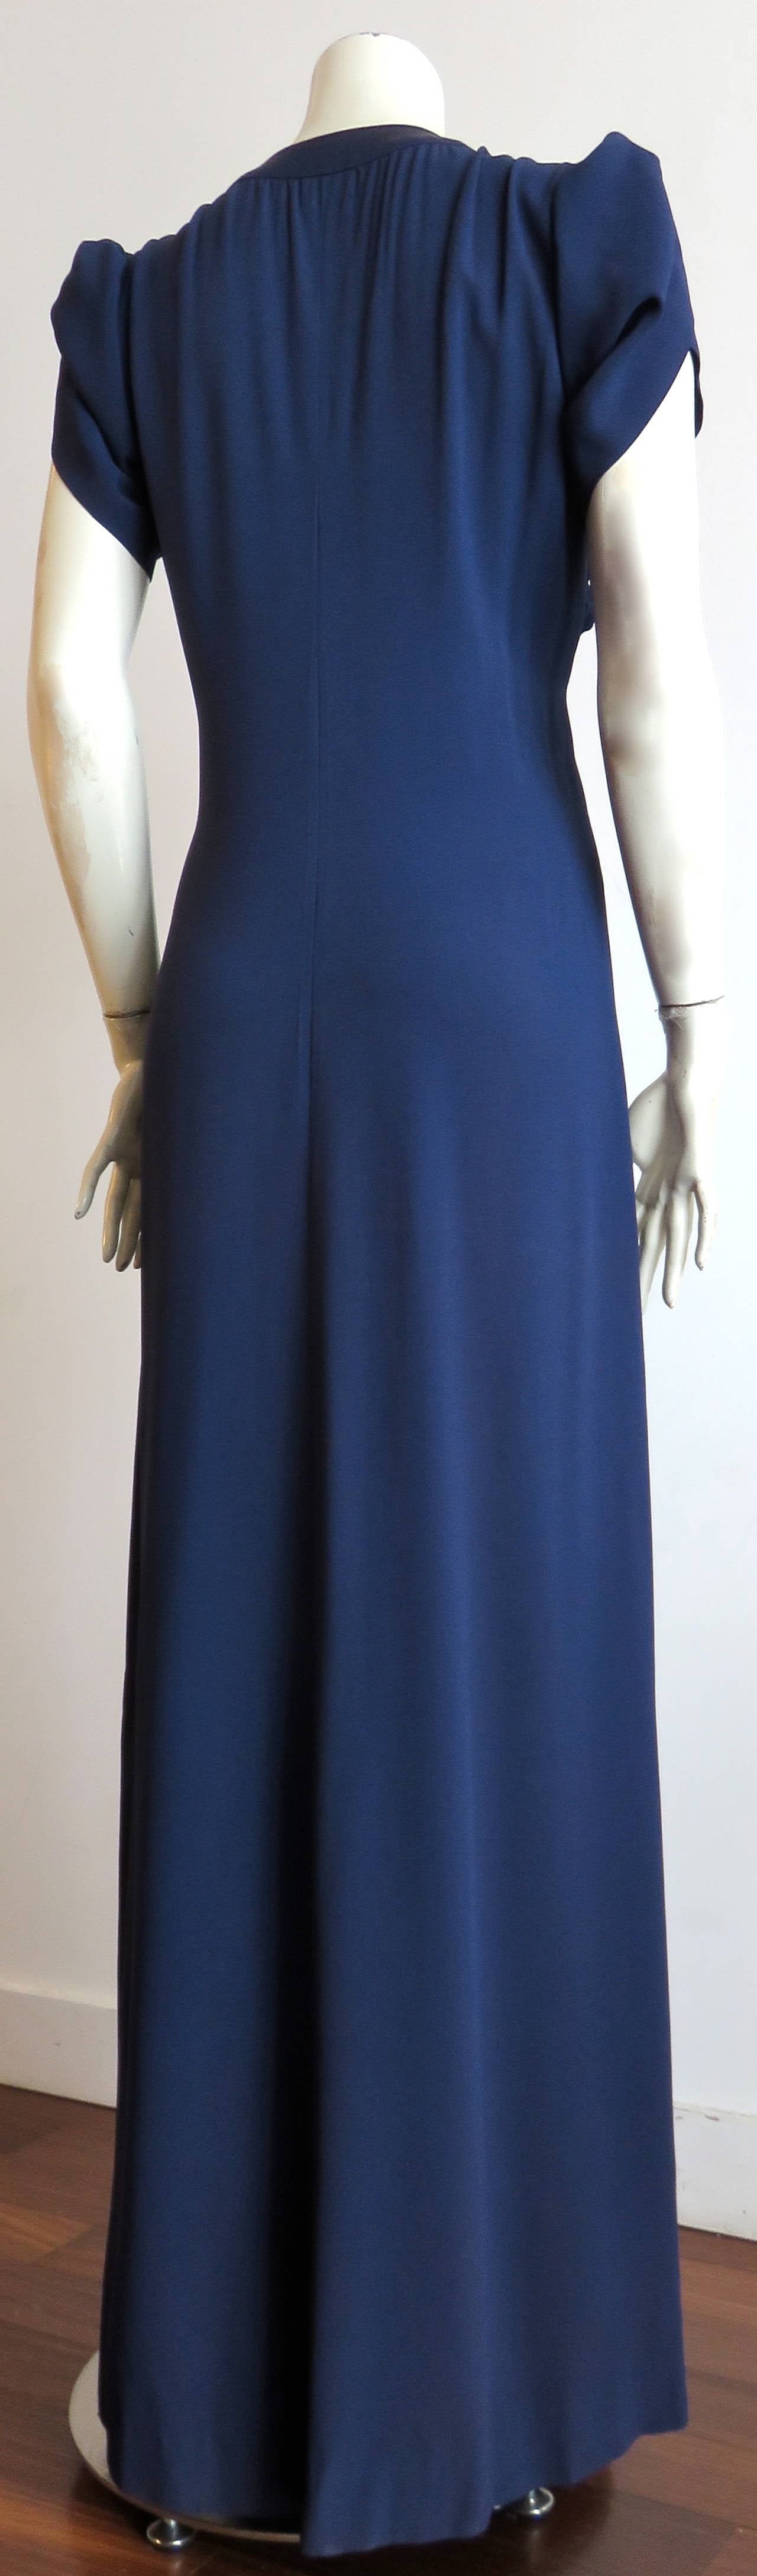 1983 YVES SAINT LAURENT 40's style blue crepe dress For Sale 1